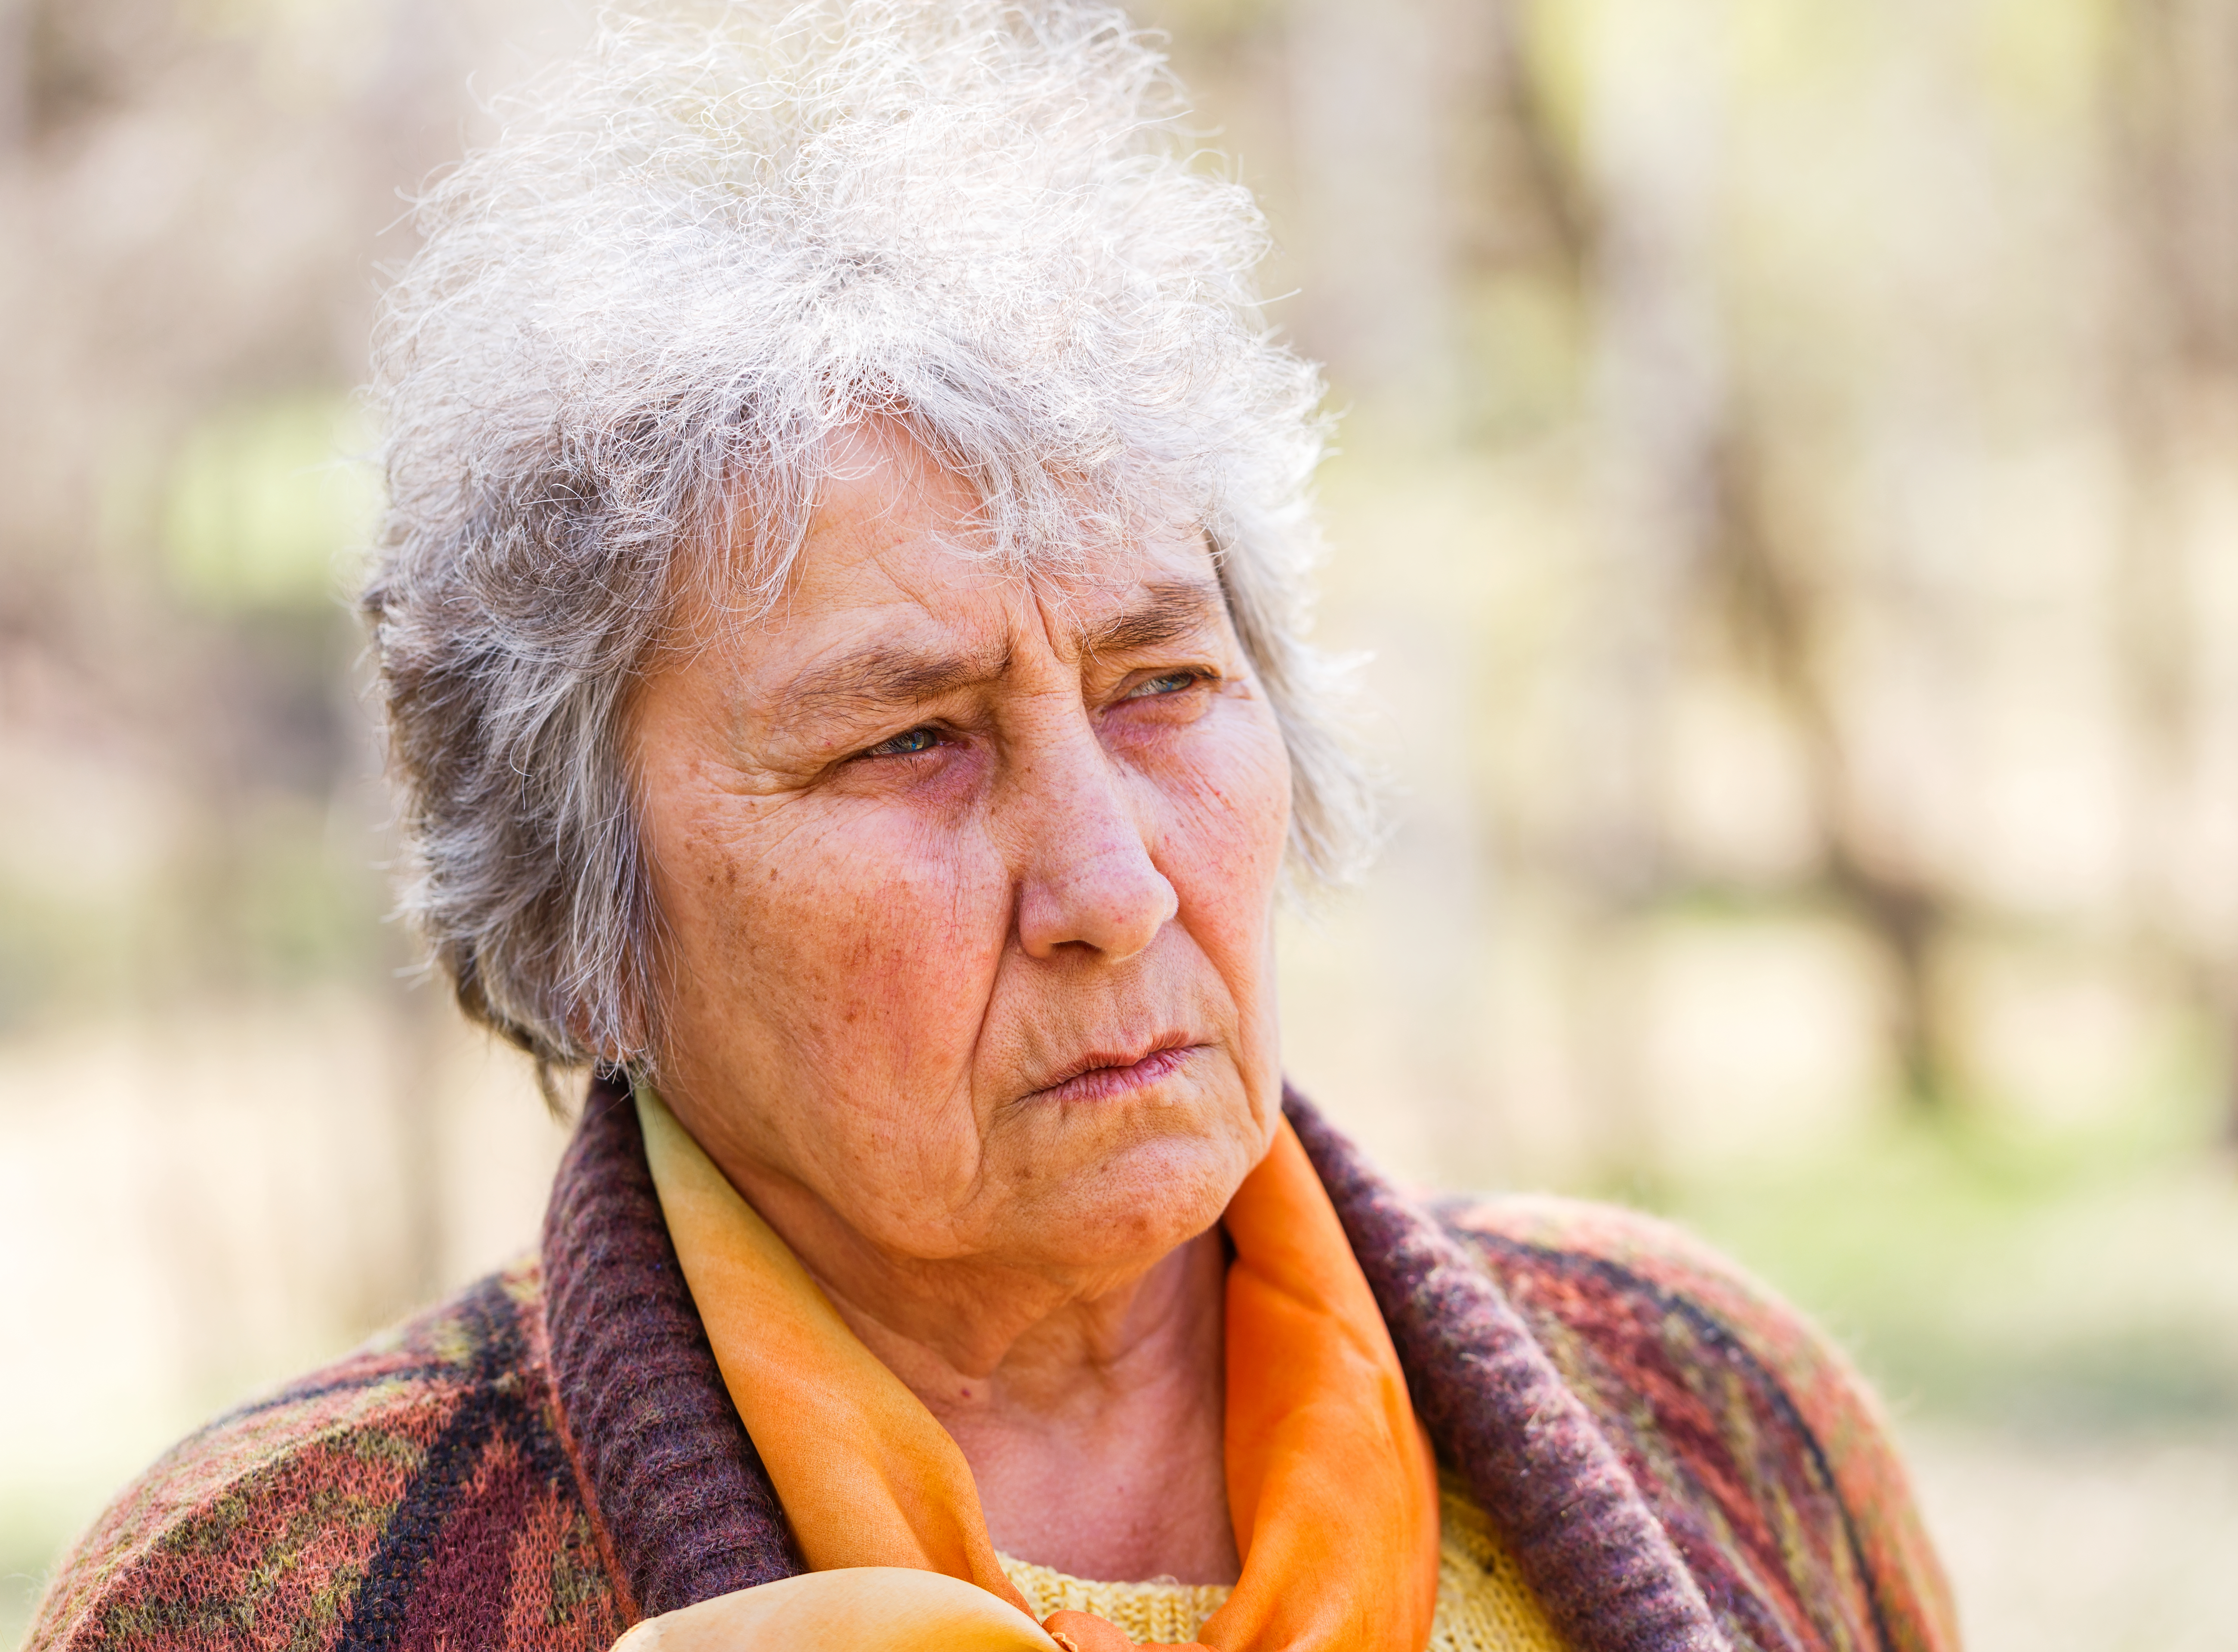 Une femme âgée en colère | Source : Shutterstock